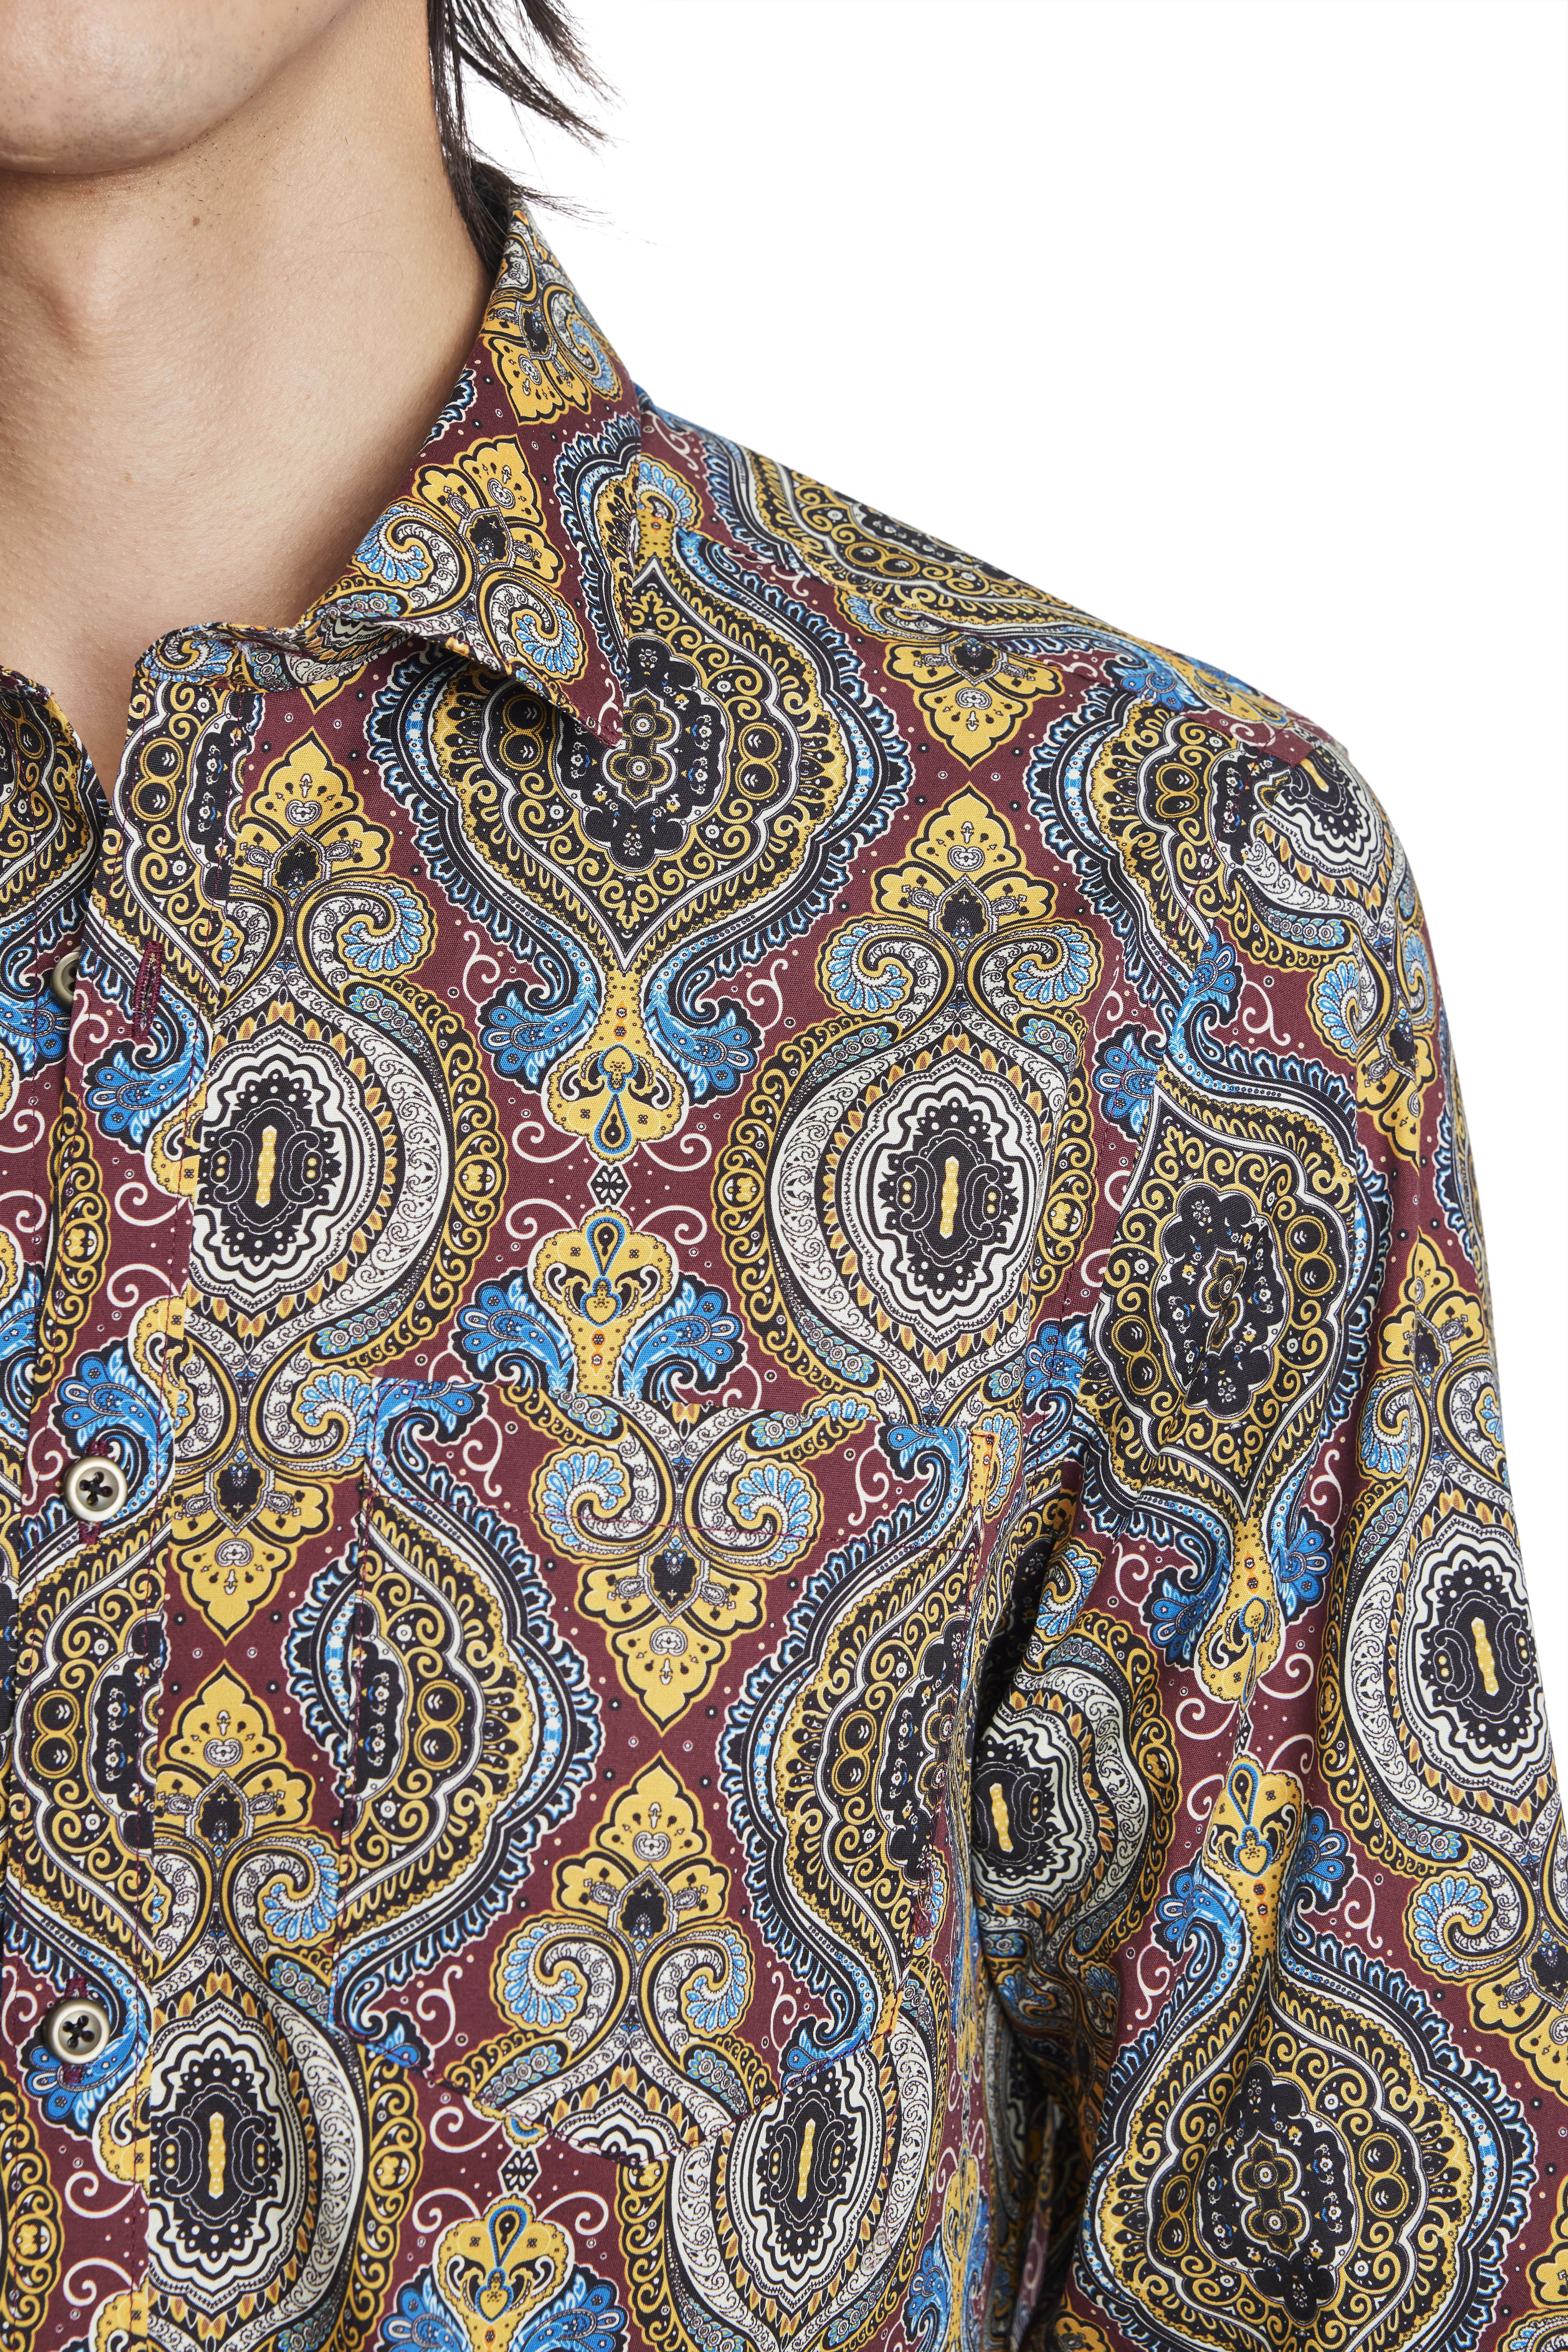 Samuel Spread Collar Shirt - Vintage Paisley